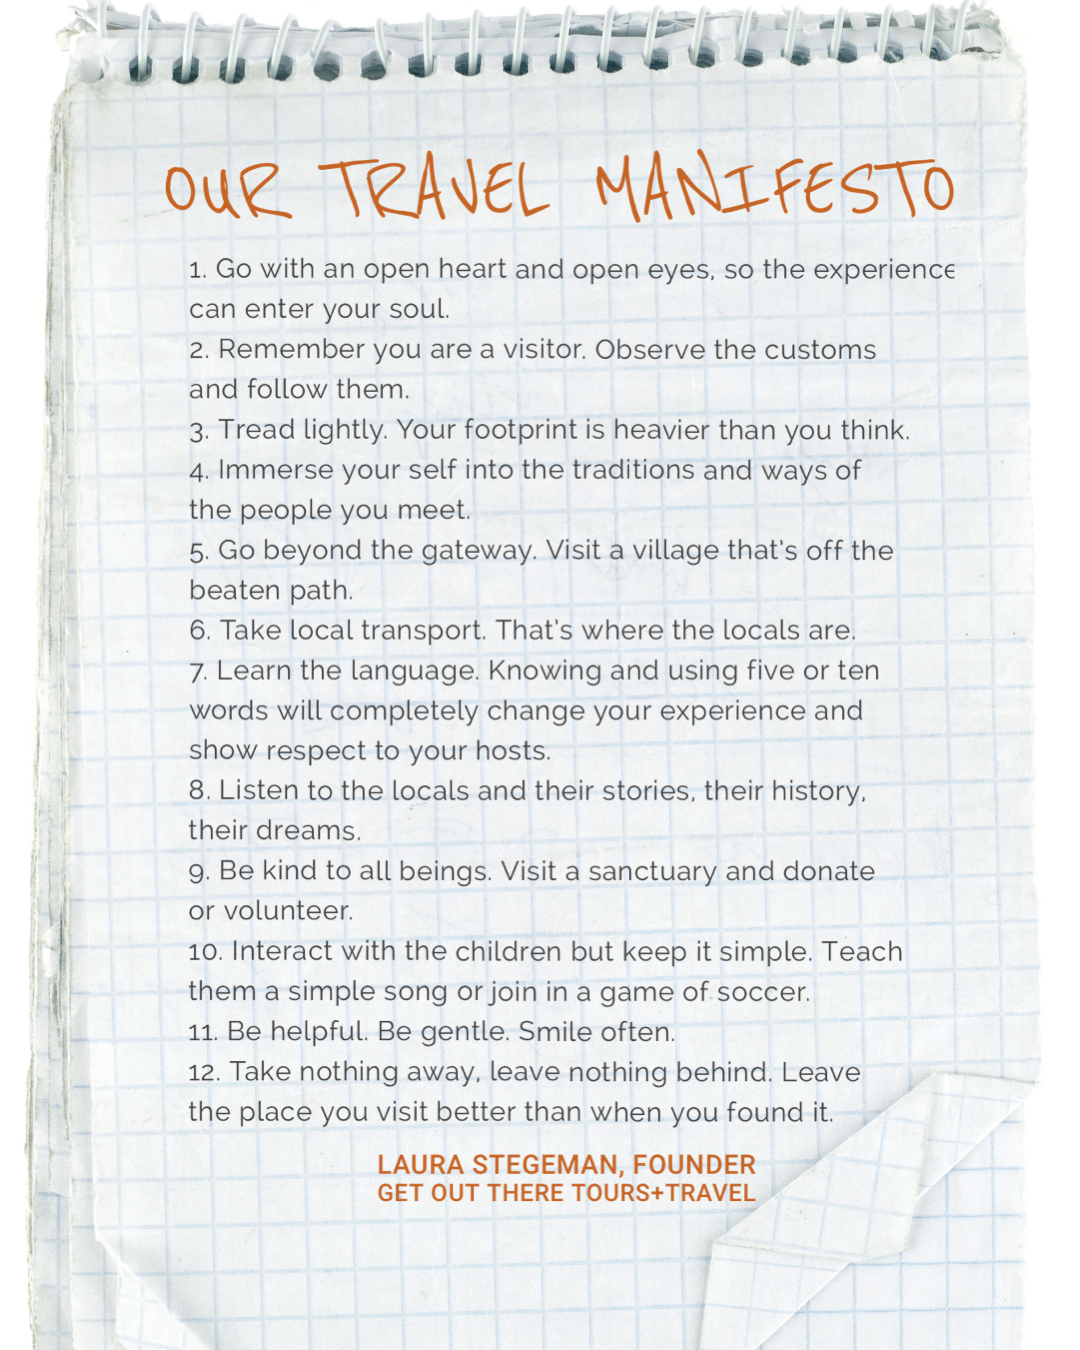 our travel manifesto description